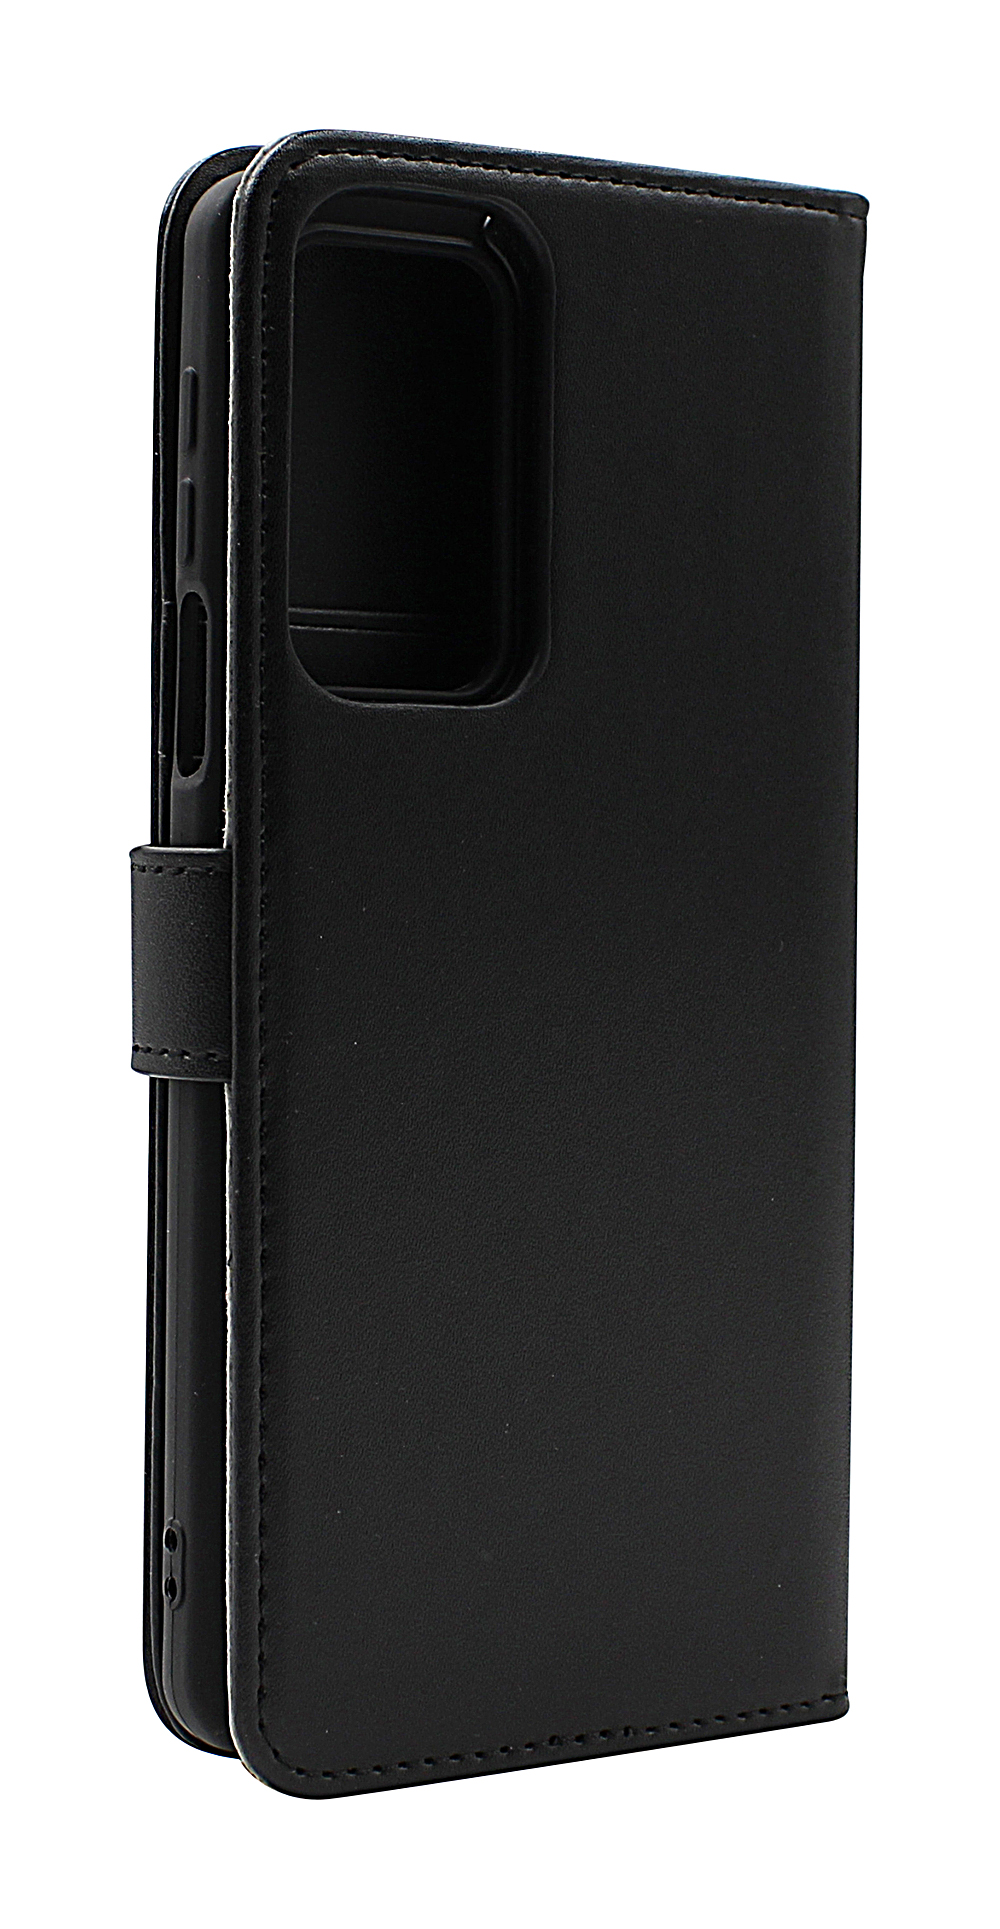 Skimblocker Magnet Wallet Motorola Edge 20 Pro